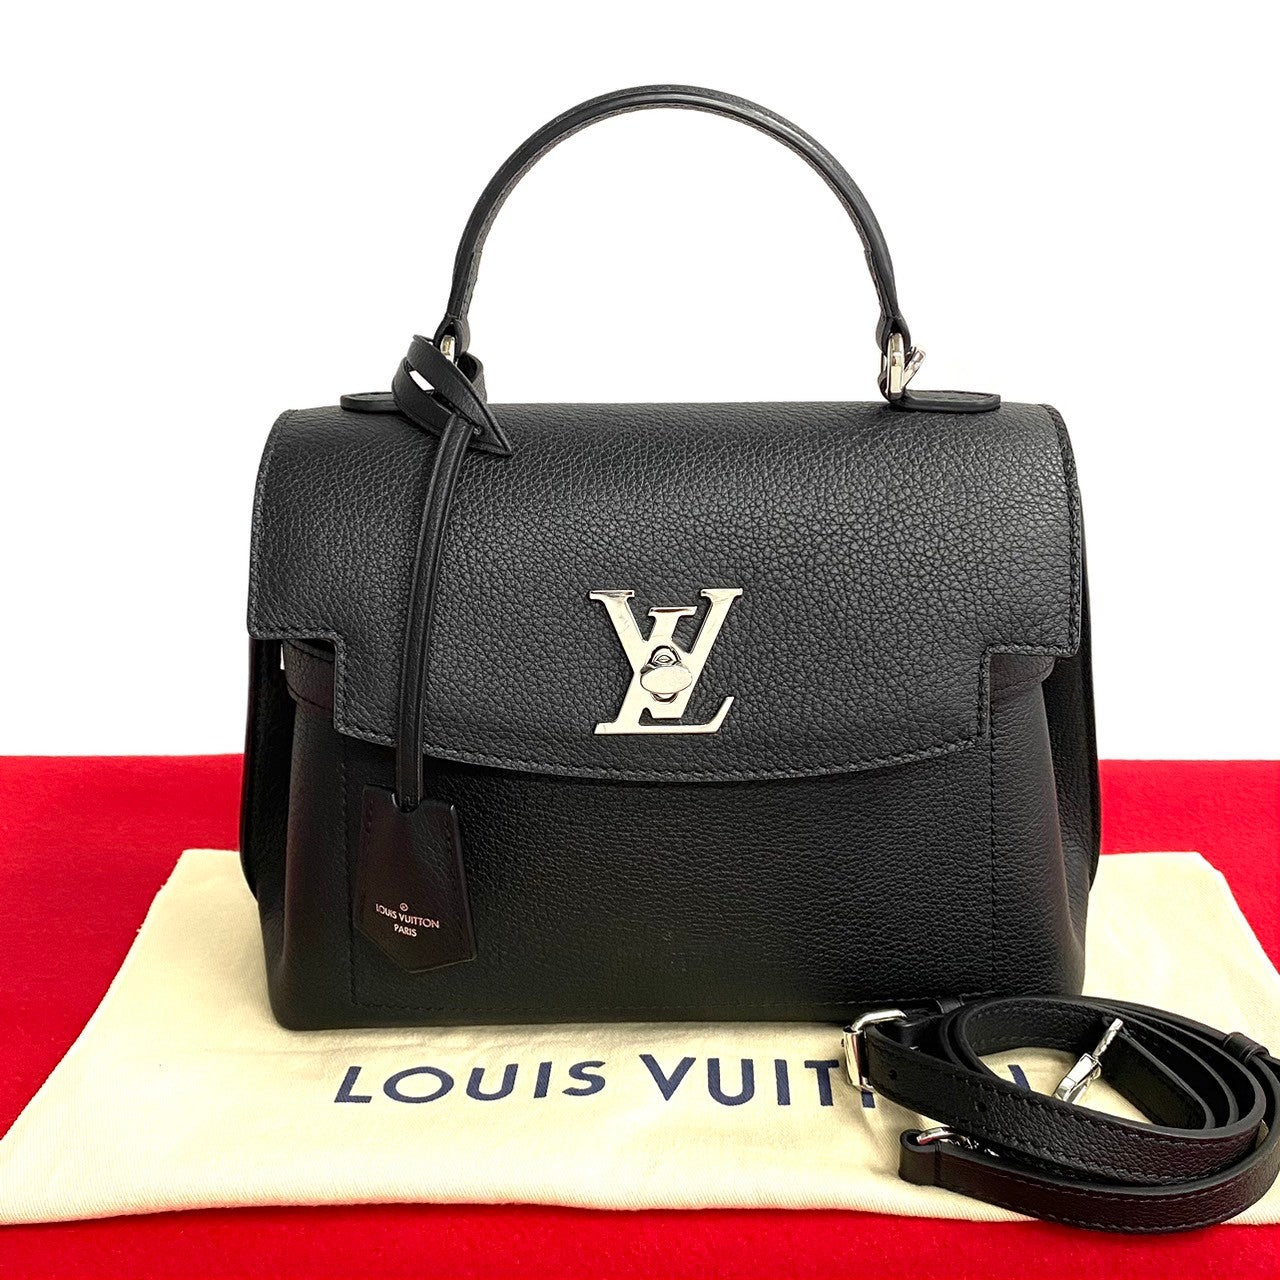 Louis Vuitton Lock Me Ever Mini Leather Handbag M20997 in Excellent condition